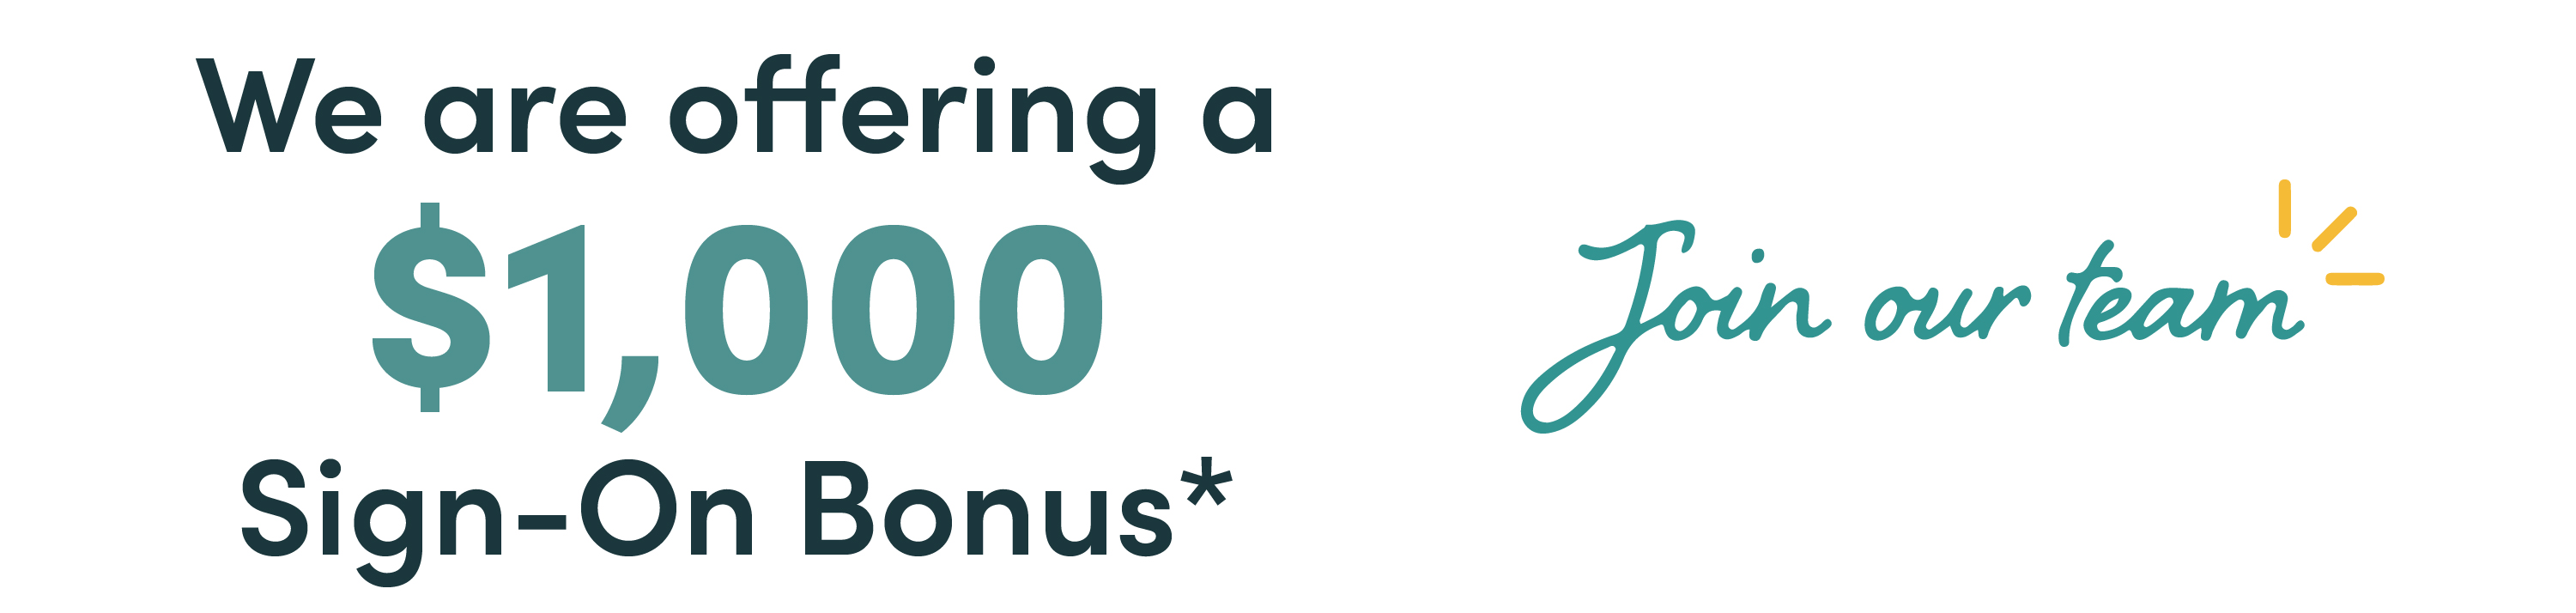 Offering $1,000 sign-on bonus